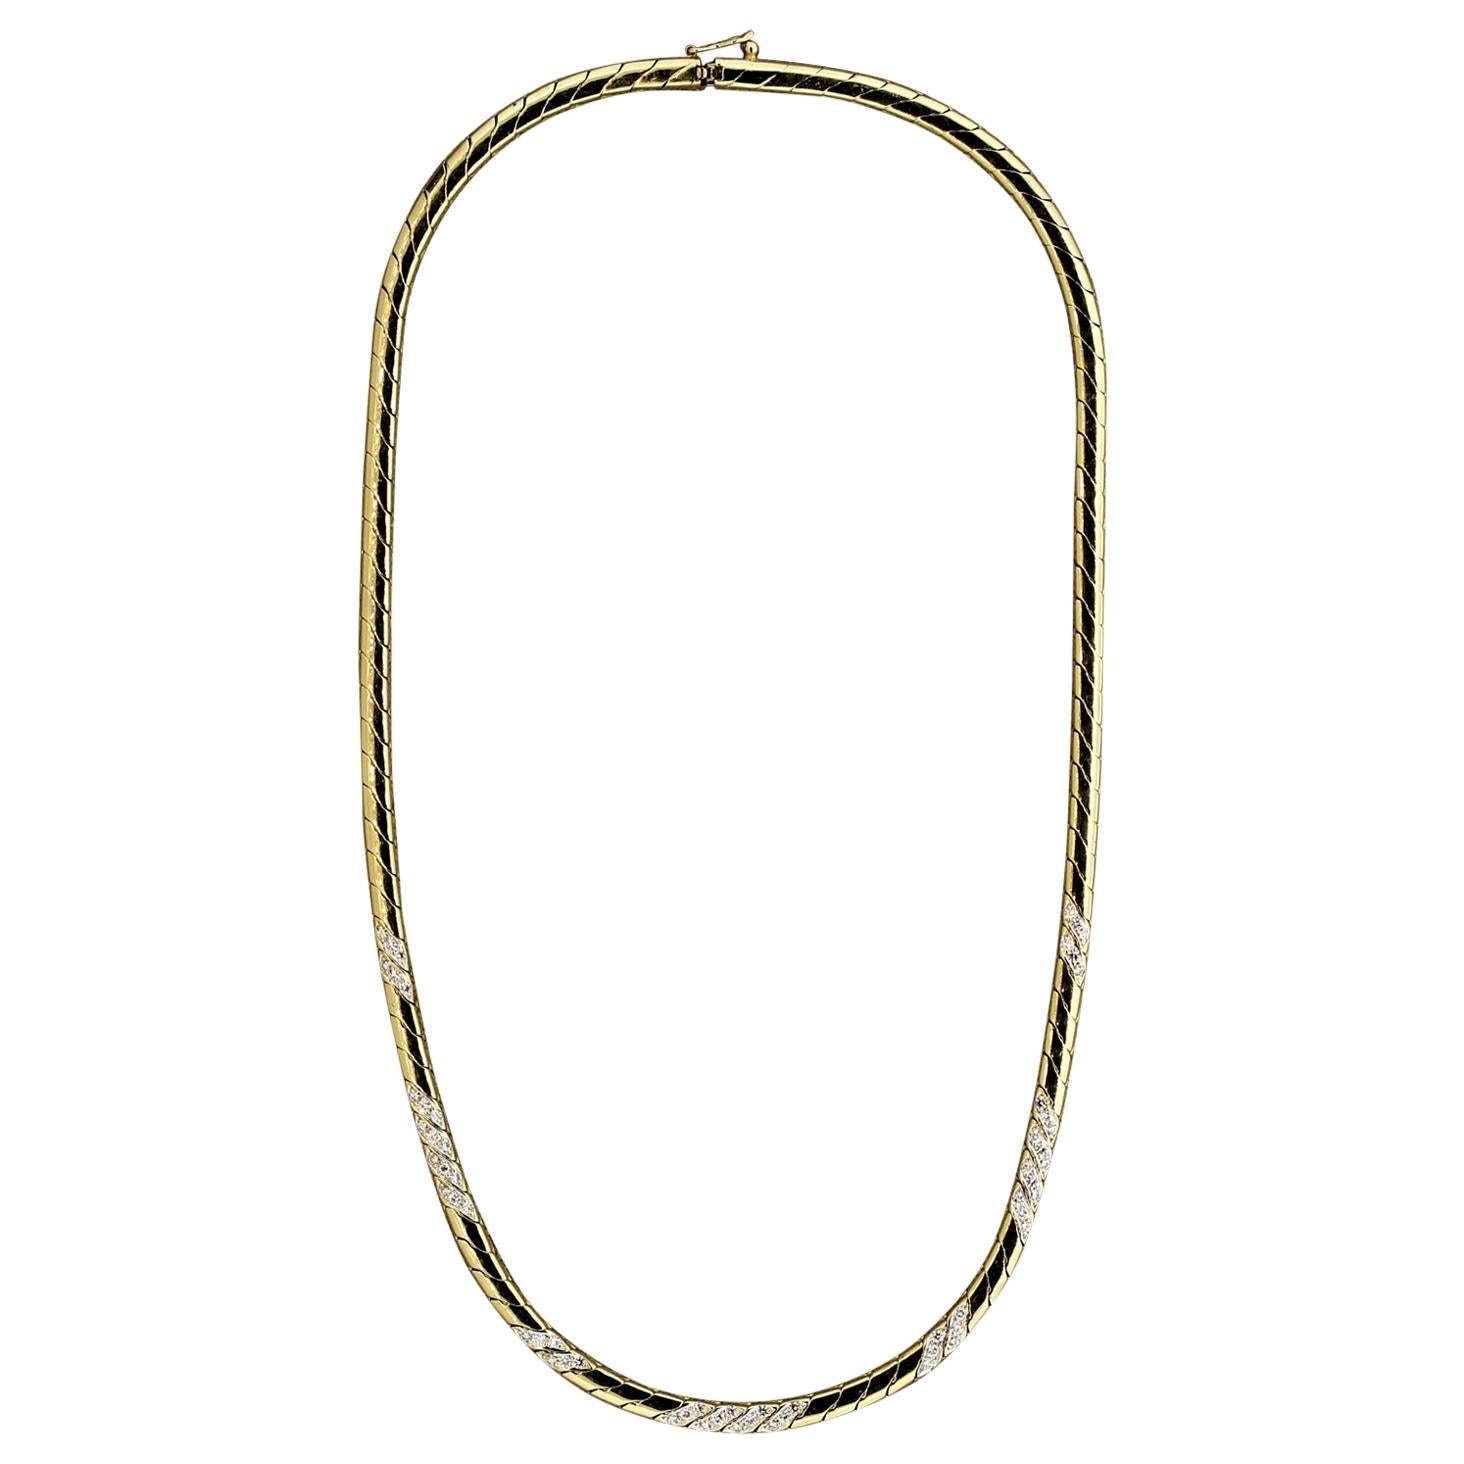 Piaget Diamond Gold Collar Necklace